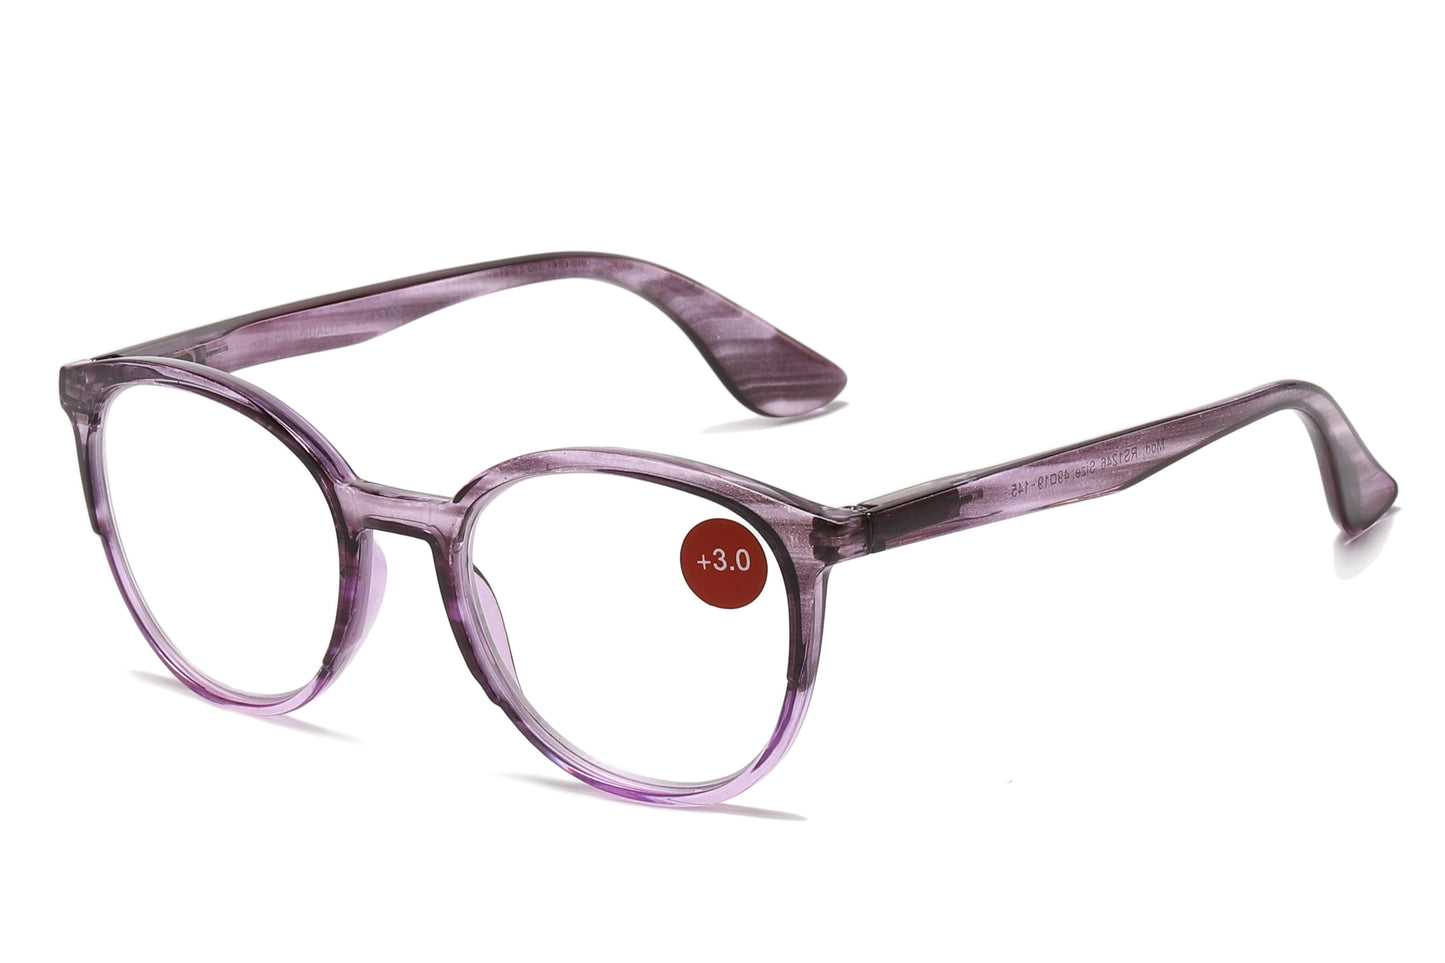 RS 1246 - Plastic Round Reading Glasses